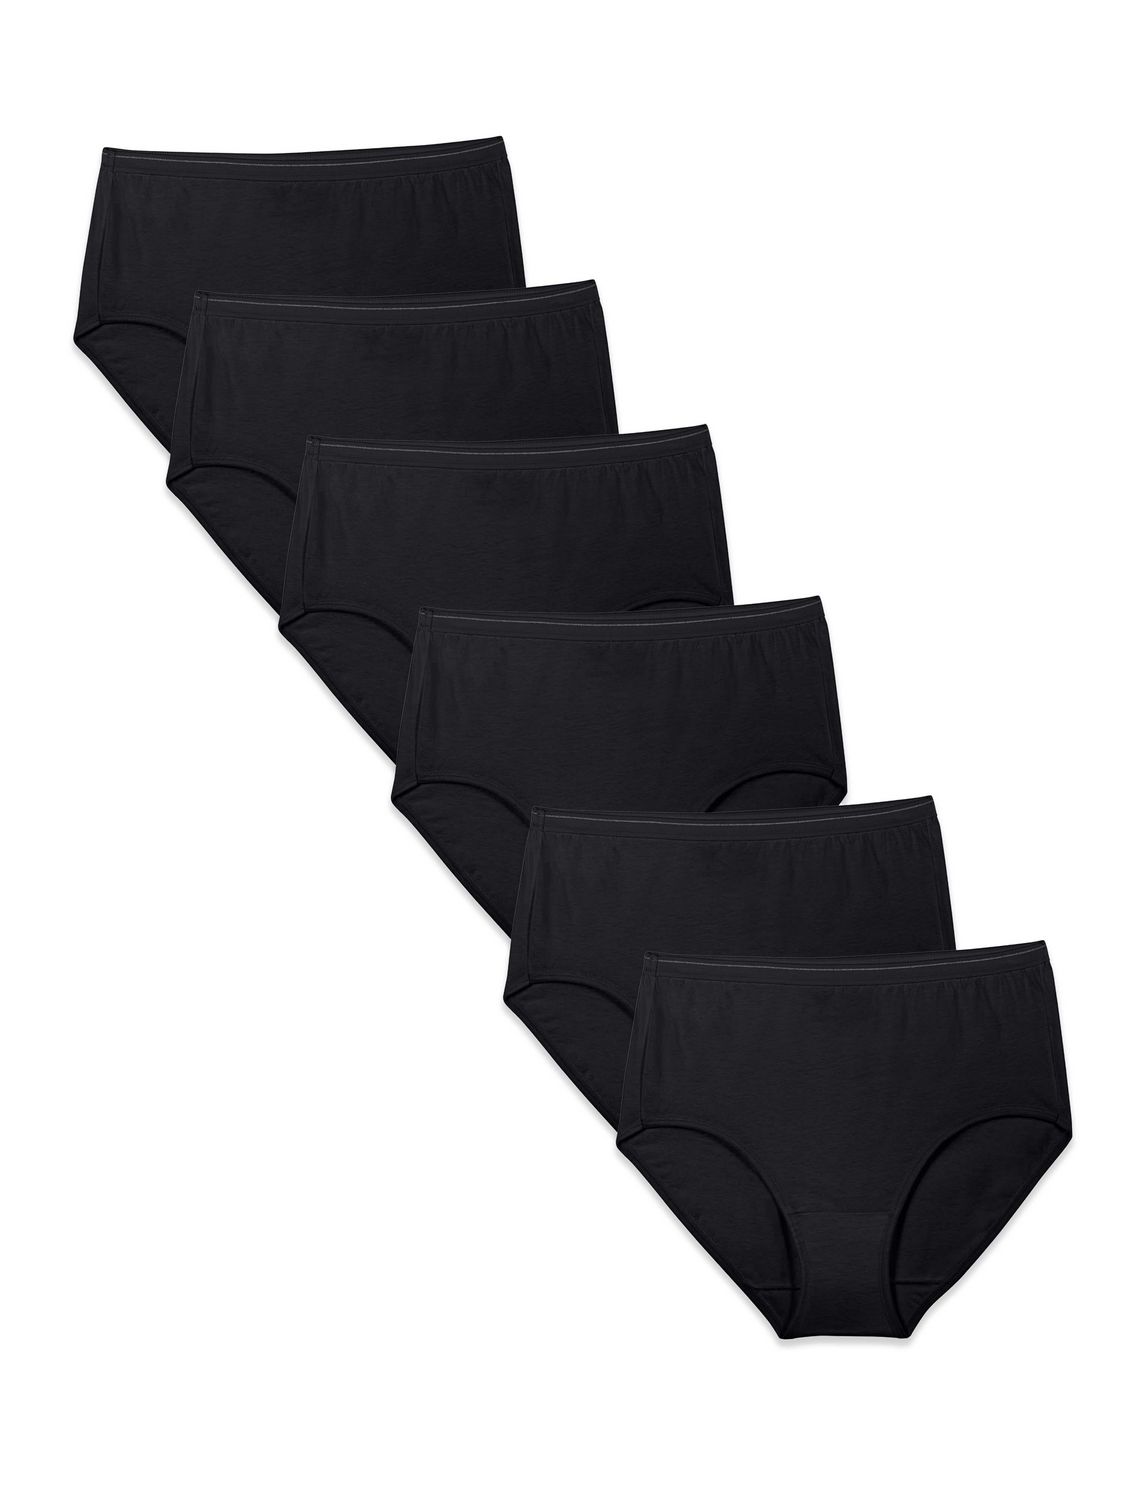 getknotty Knotty Underwear - Women's Underwear 6 Pack - Black